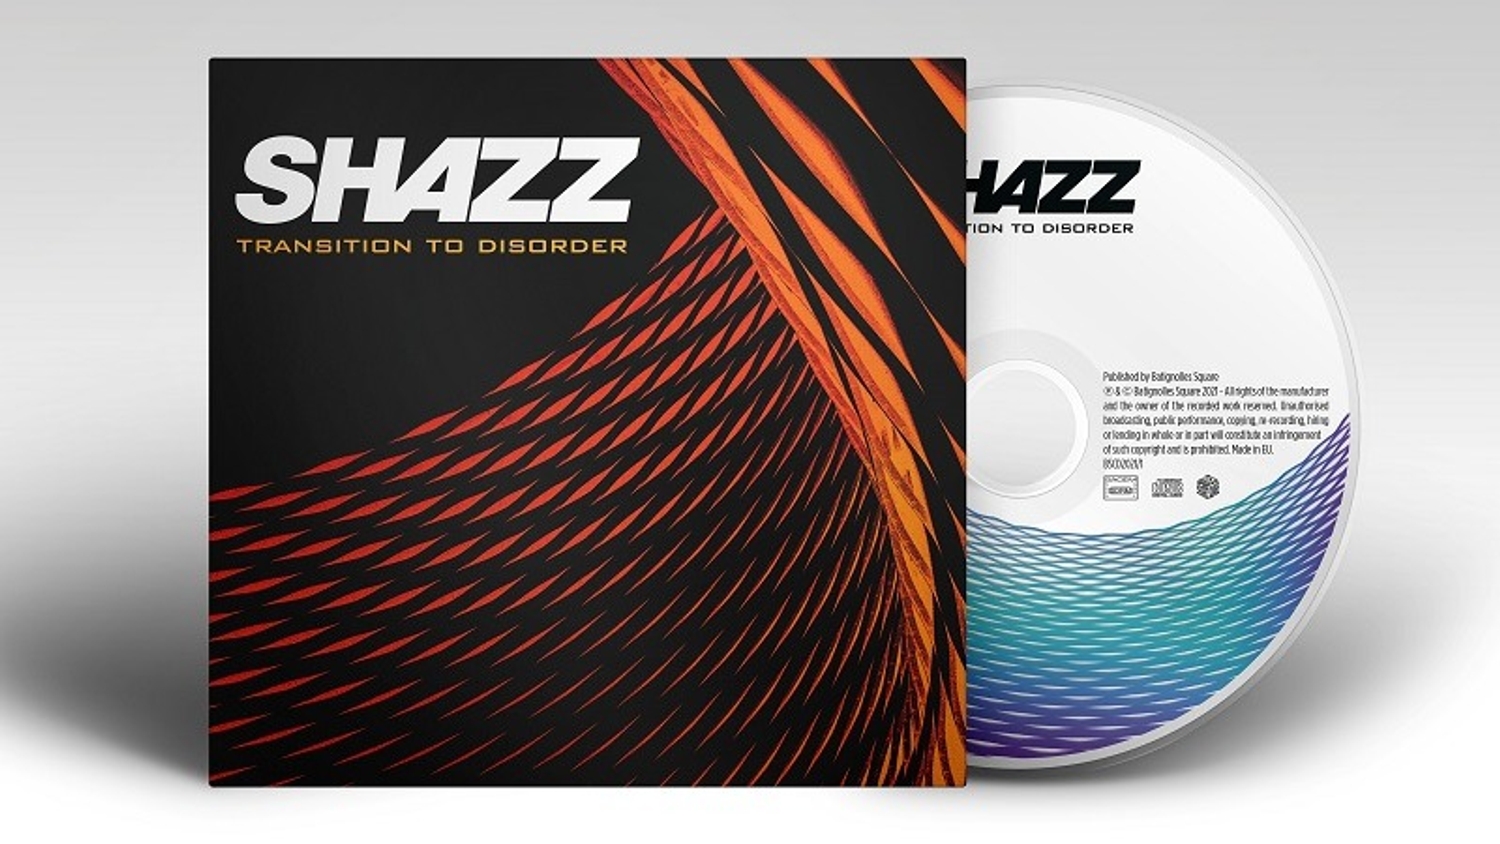 GAGNE L'ALBUM DE SHAZZ "TRANSITION TO DISORDER"